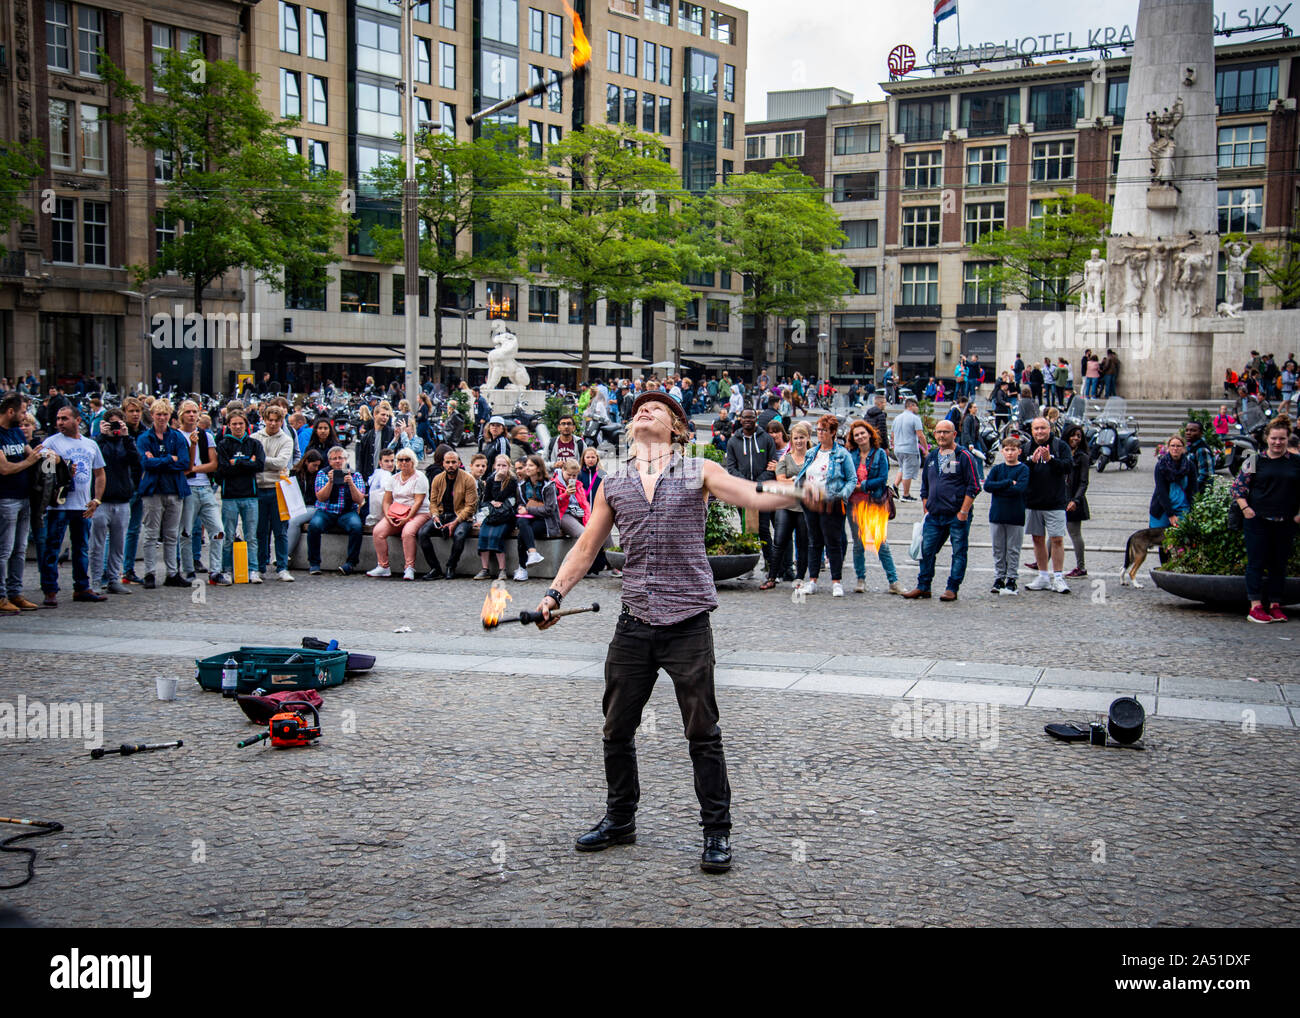 street entertainer juggling burning sticks entertaining a large crowd,Dam Square,Amsterdam,Holland. Stock Photo